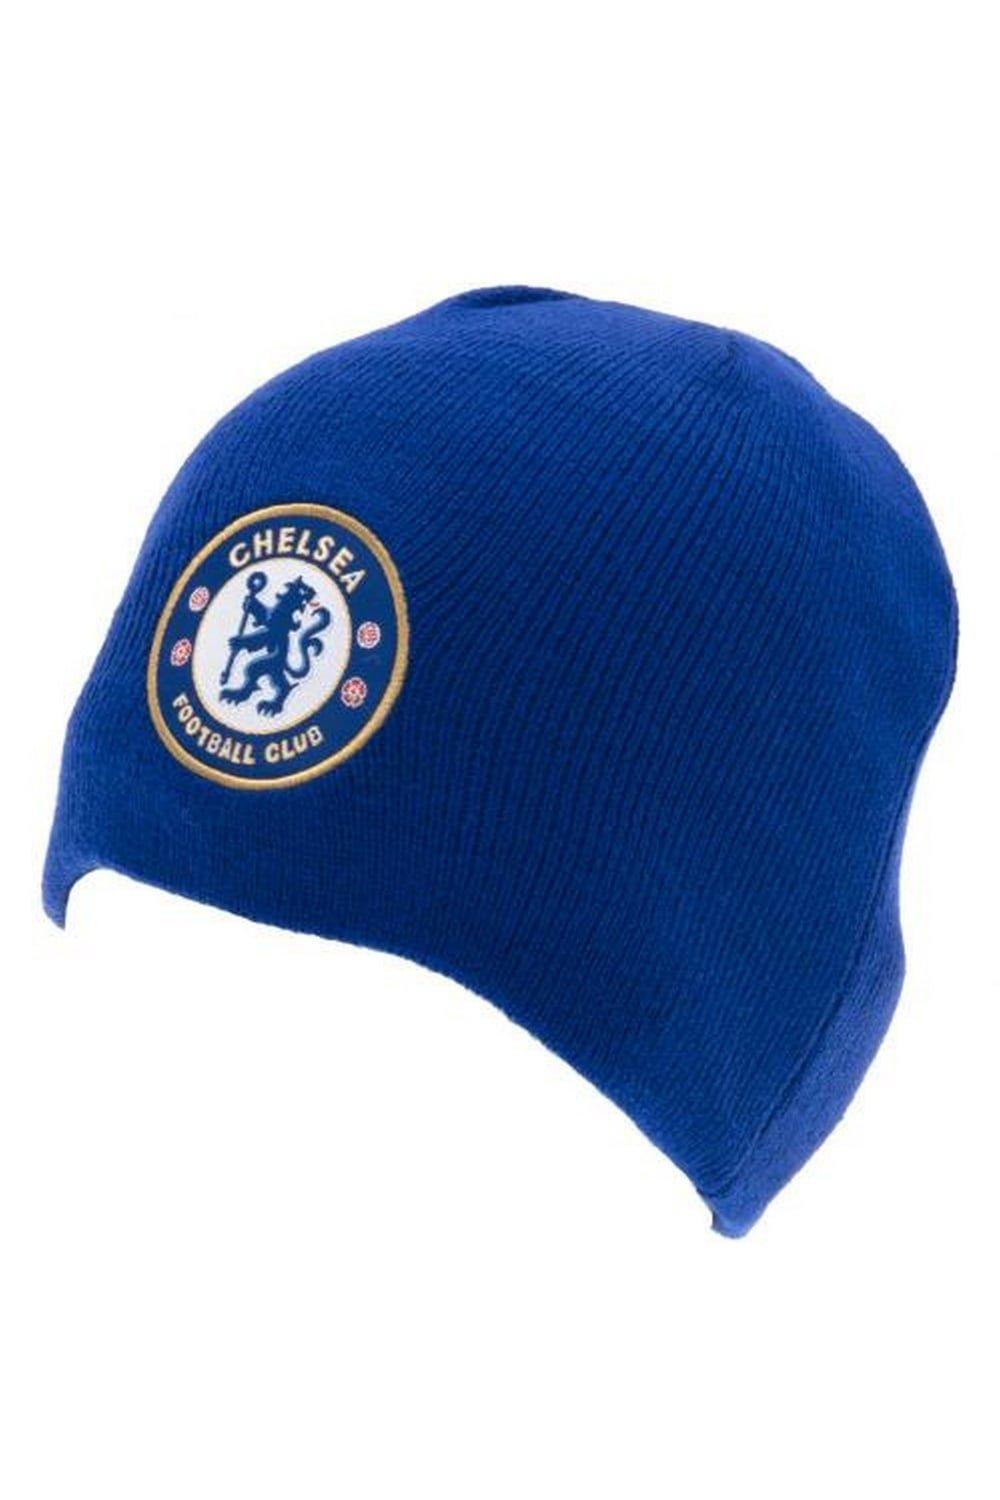 Официальная вязаная шапка Chelsea FC, синий шапка nike chelsea fc